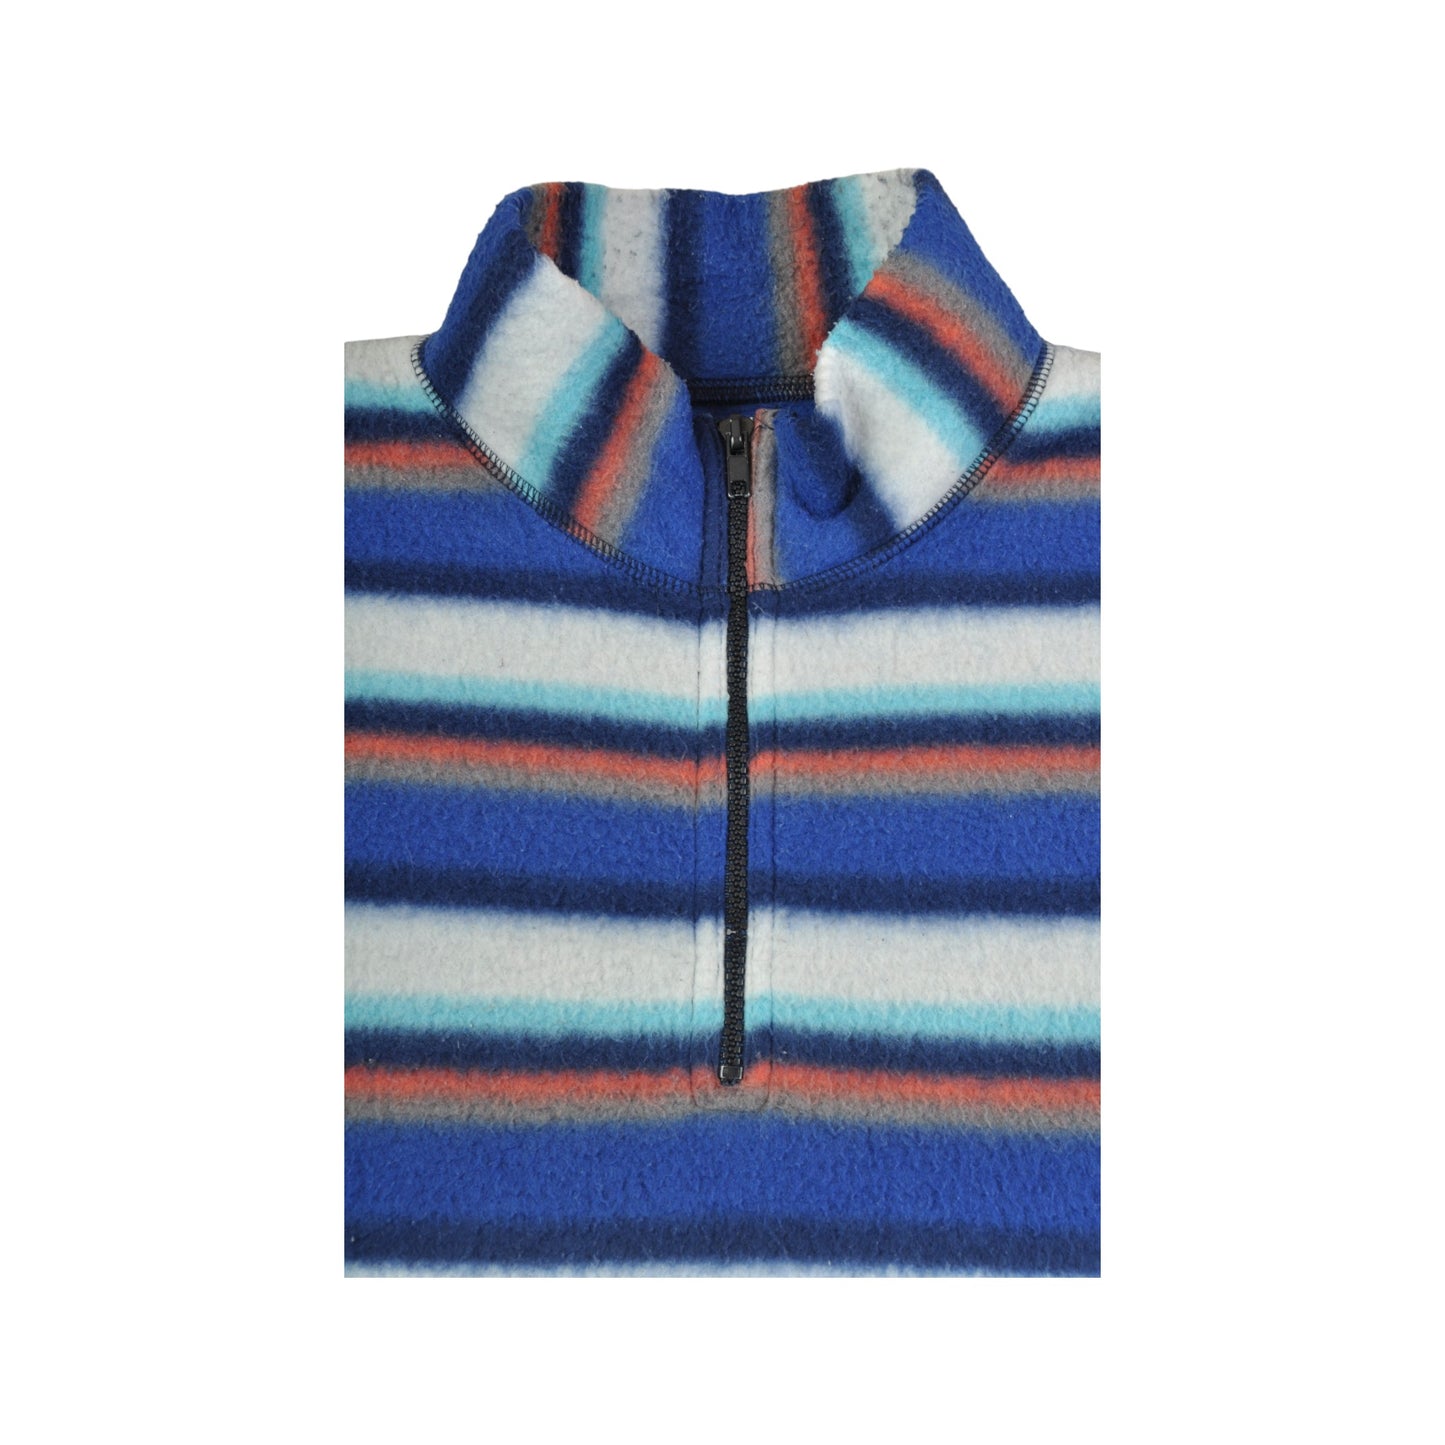 Vintage Fleece 1/4 Zip Retro Striped Pattern Blue Large